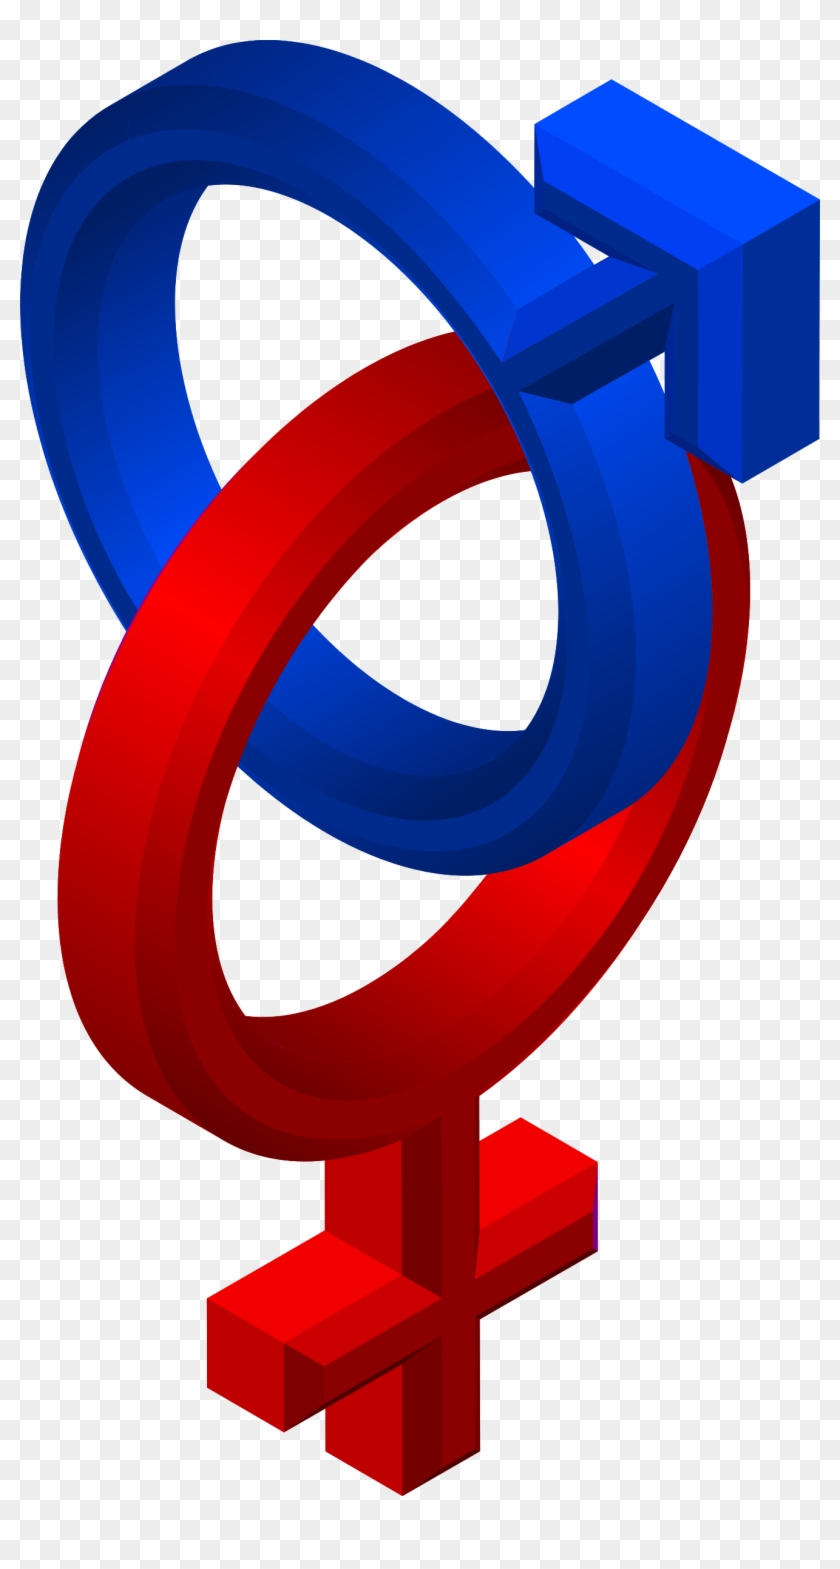 Male Female Symbols F6wchs Clipart - Man And Woman Symbols Clip Art #522257